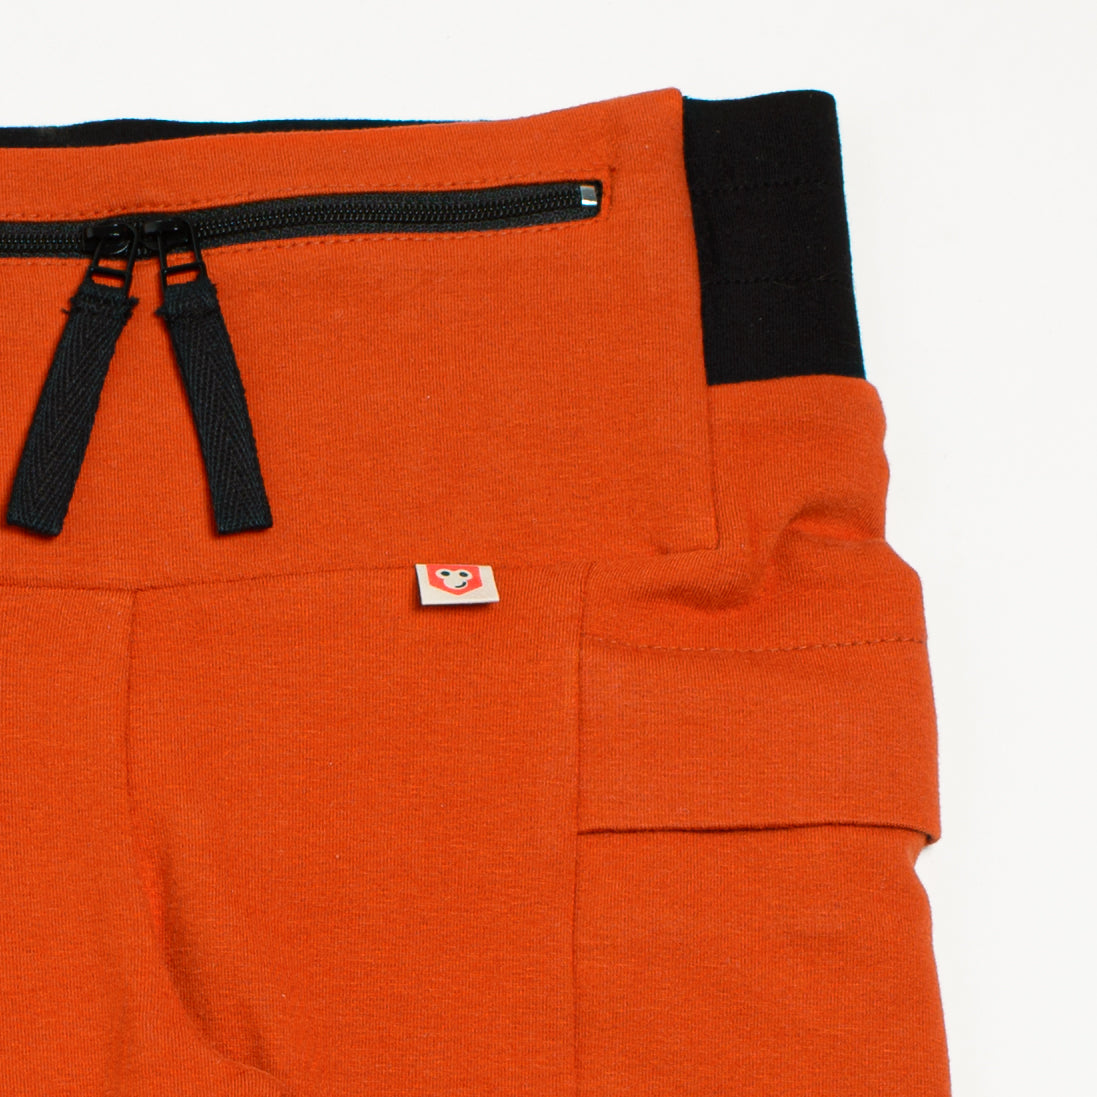 Type 1 Diabetes Clothing - Biker shorts Orange | Our Pocket Hero